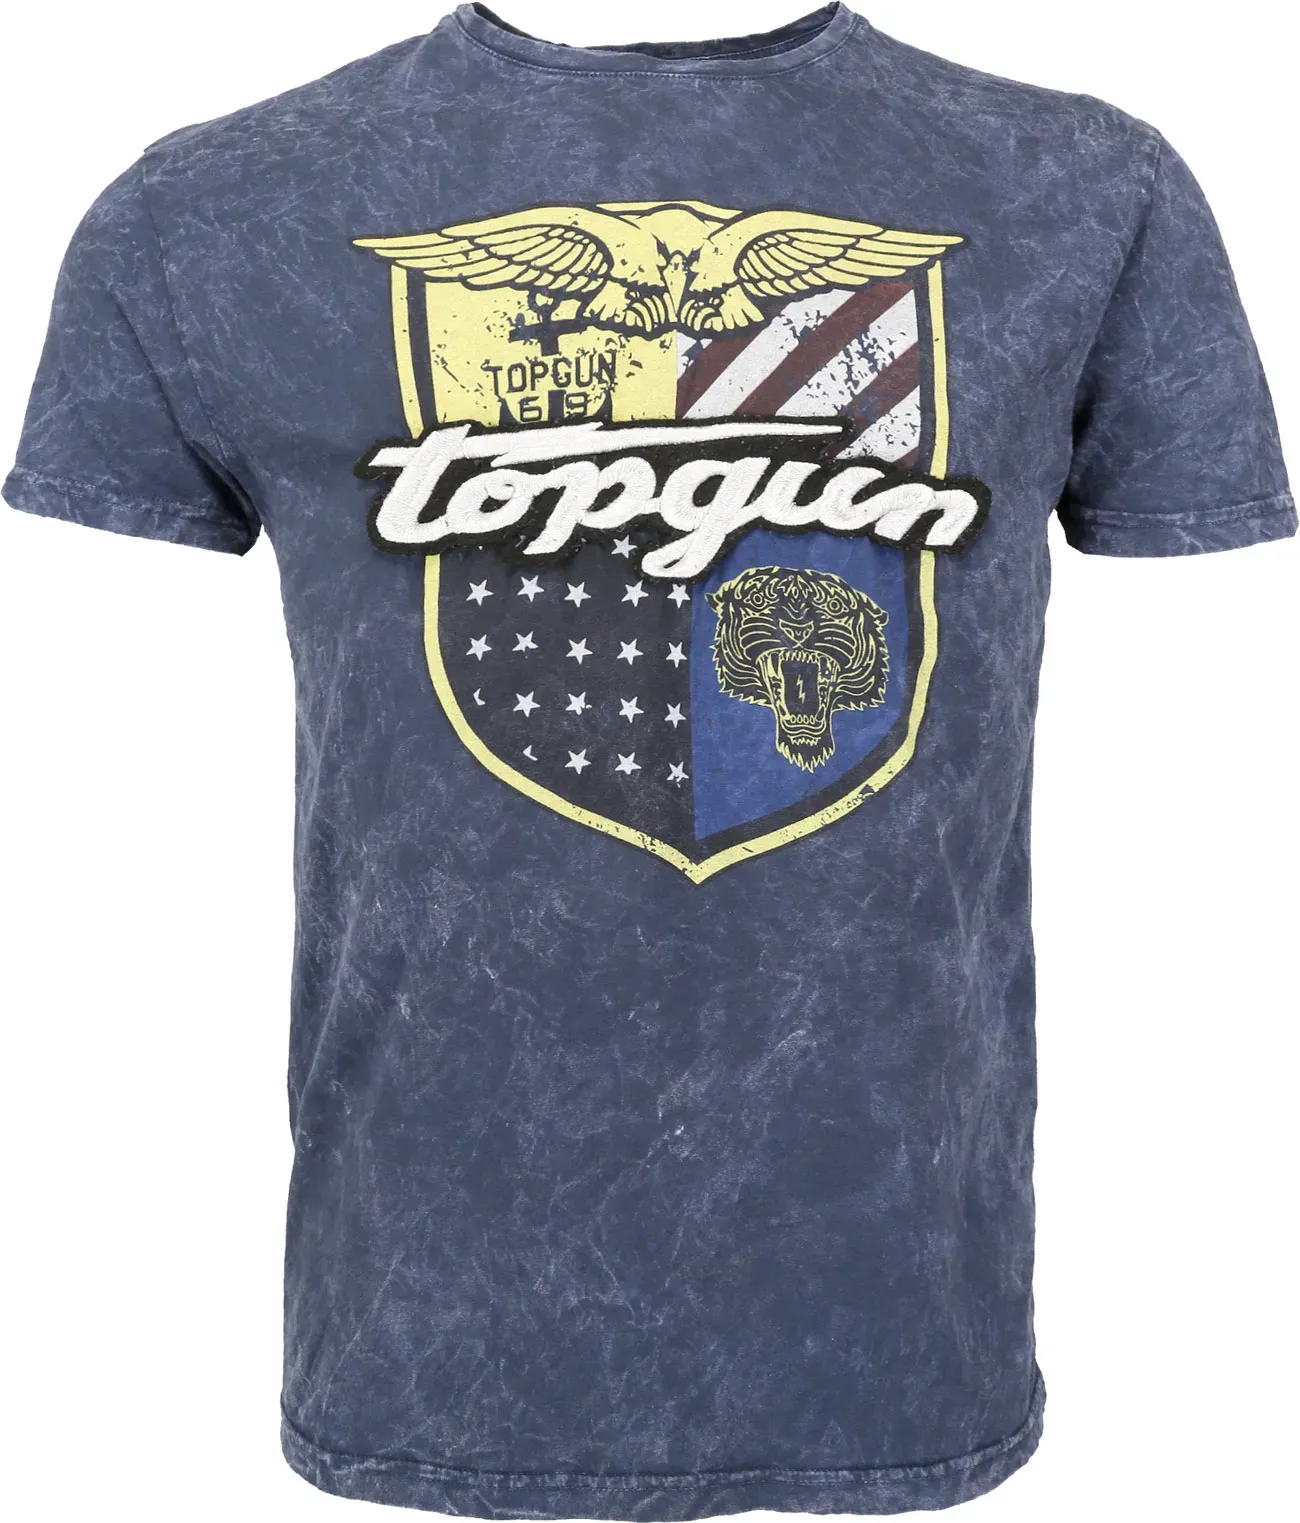 Top Gun Insignia, t-shirt - Bleu Foncé - S